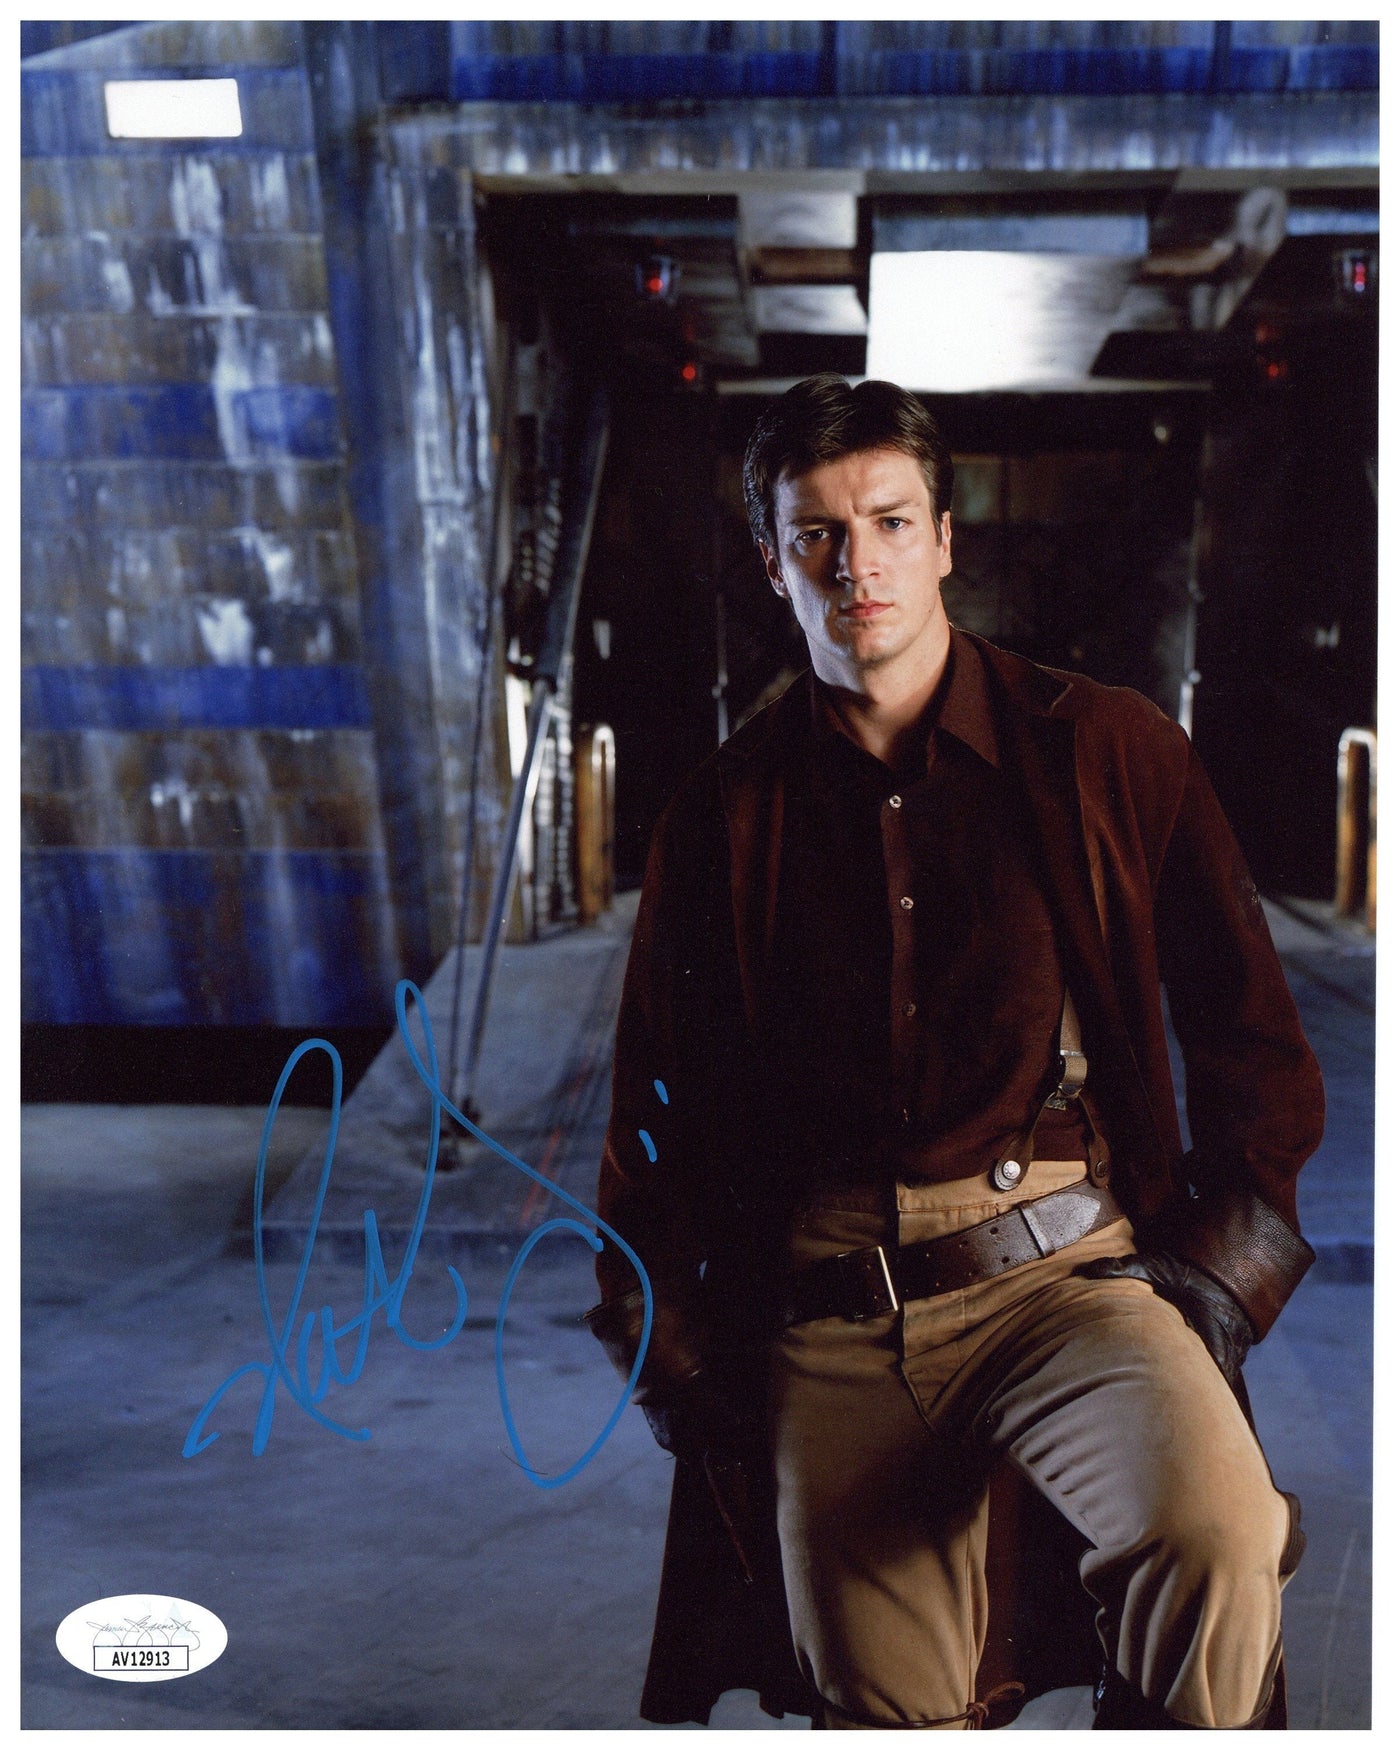 Nathan Fillion Signed 8x10 Photograph Firefly Capt Mal Reynolds Autographed JSA COA